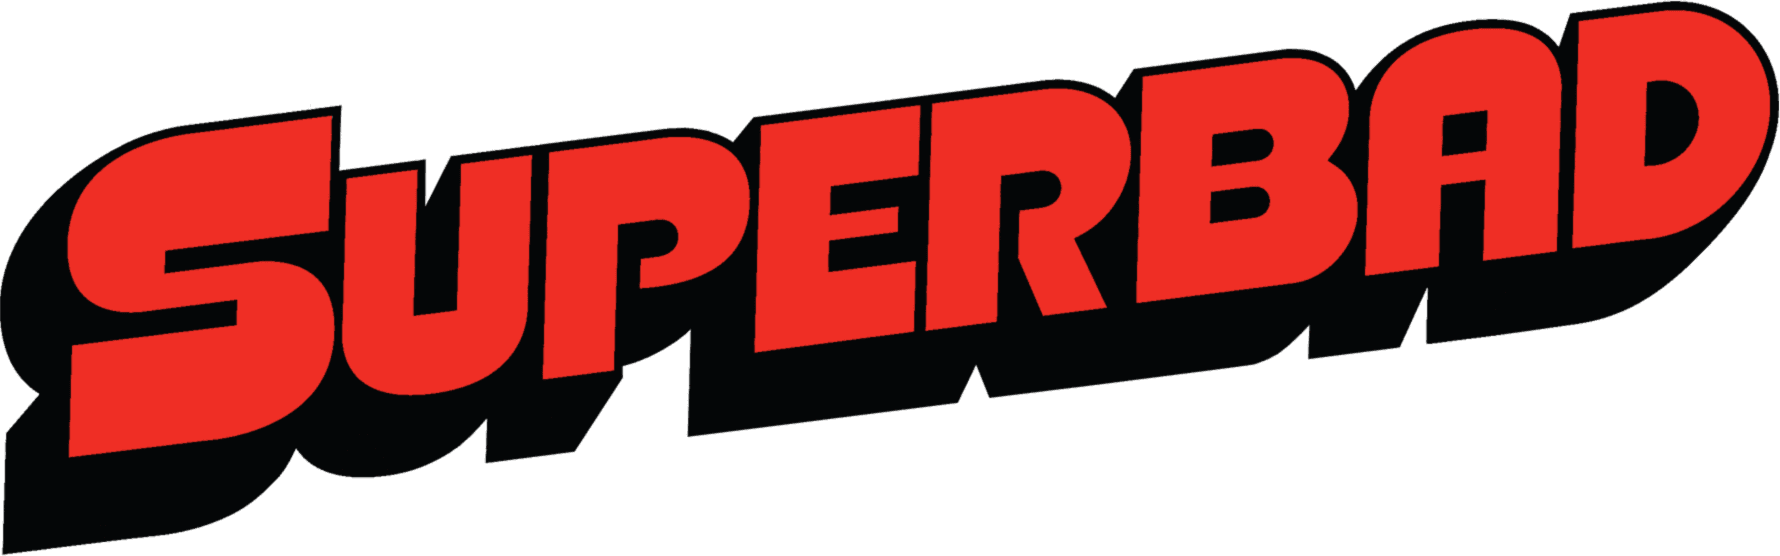 Superbad logo